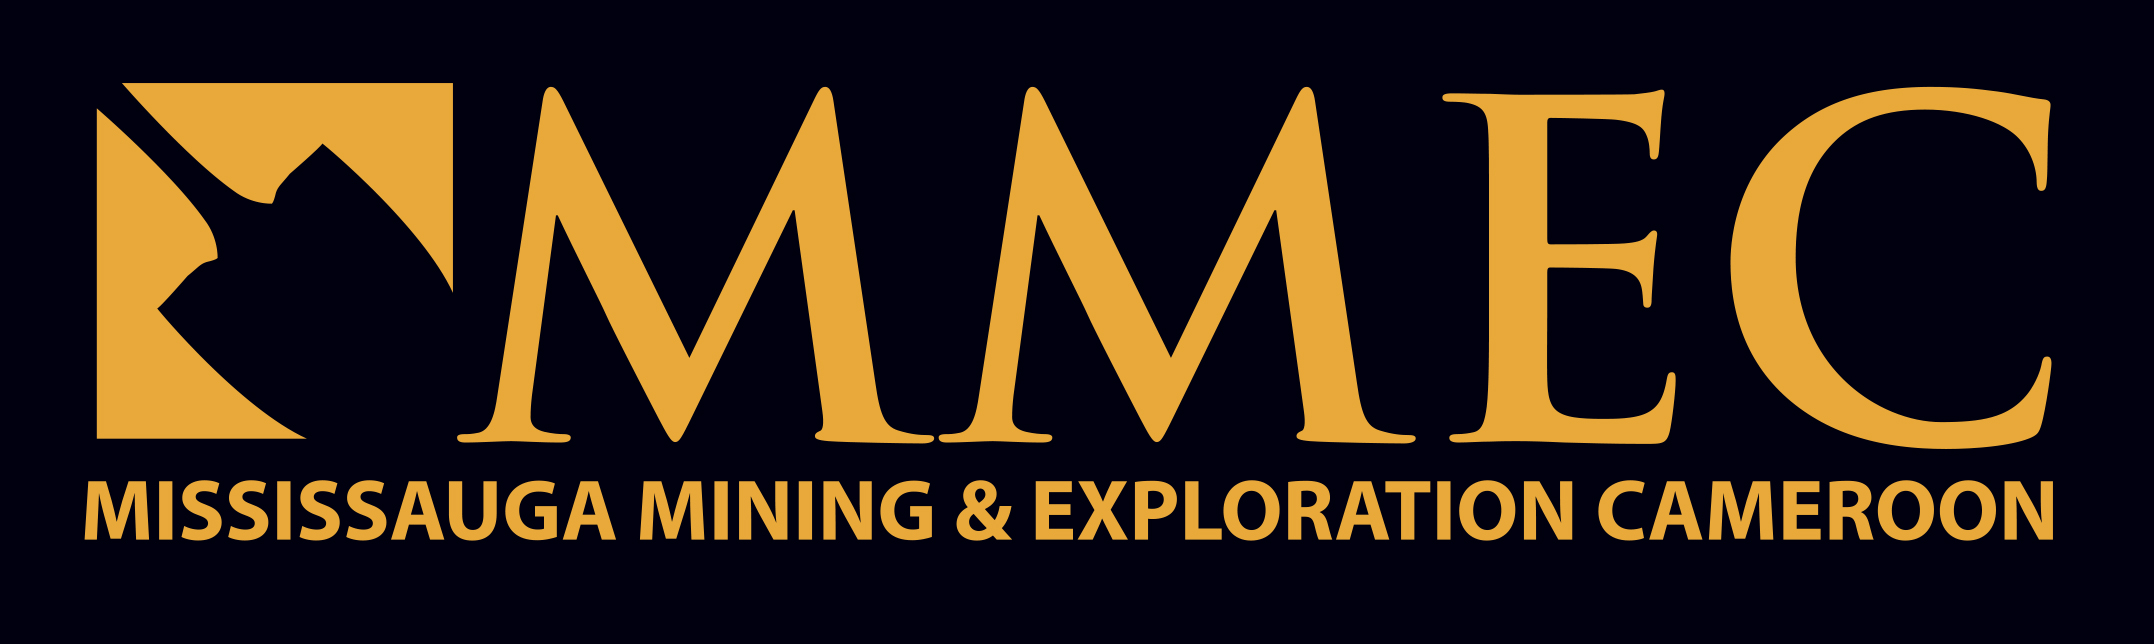 Mississauga Mining & Exploration Cameroon (MMEC)